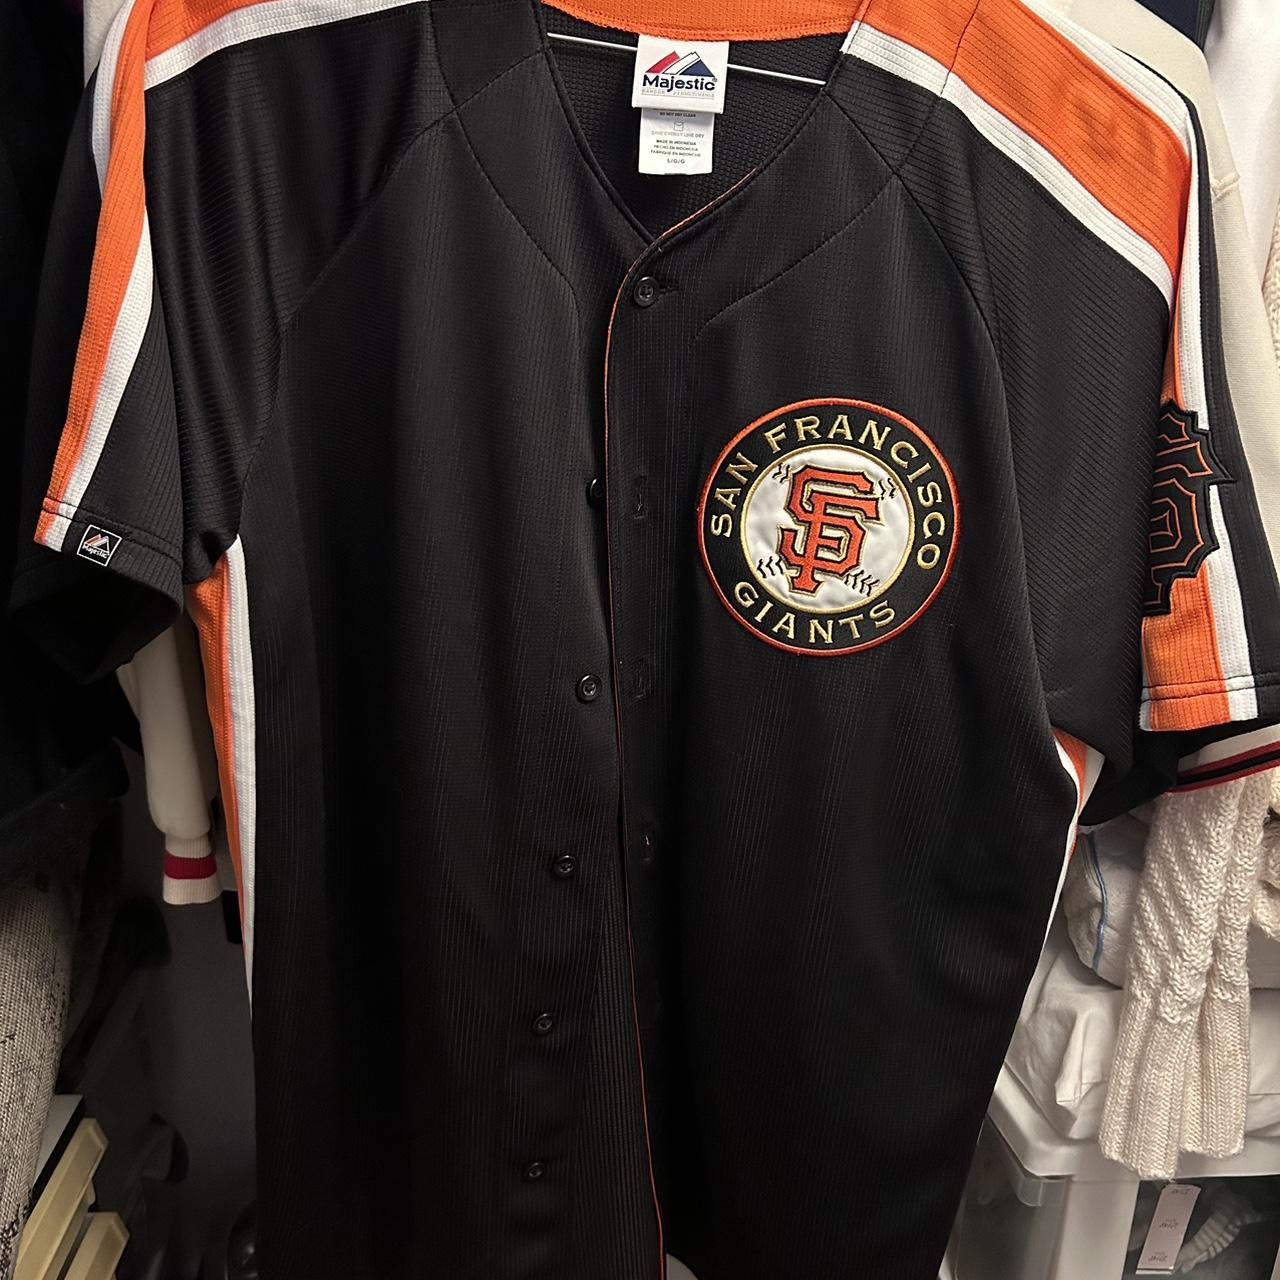 San Francisco Giants Sciarrino jersey. Priced to - Depop